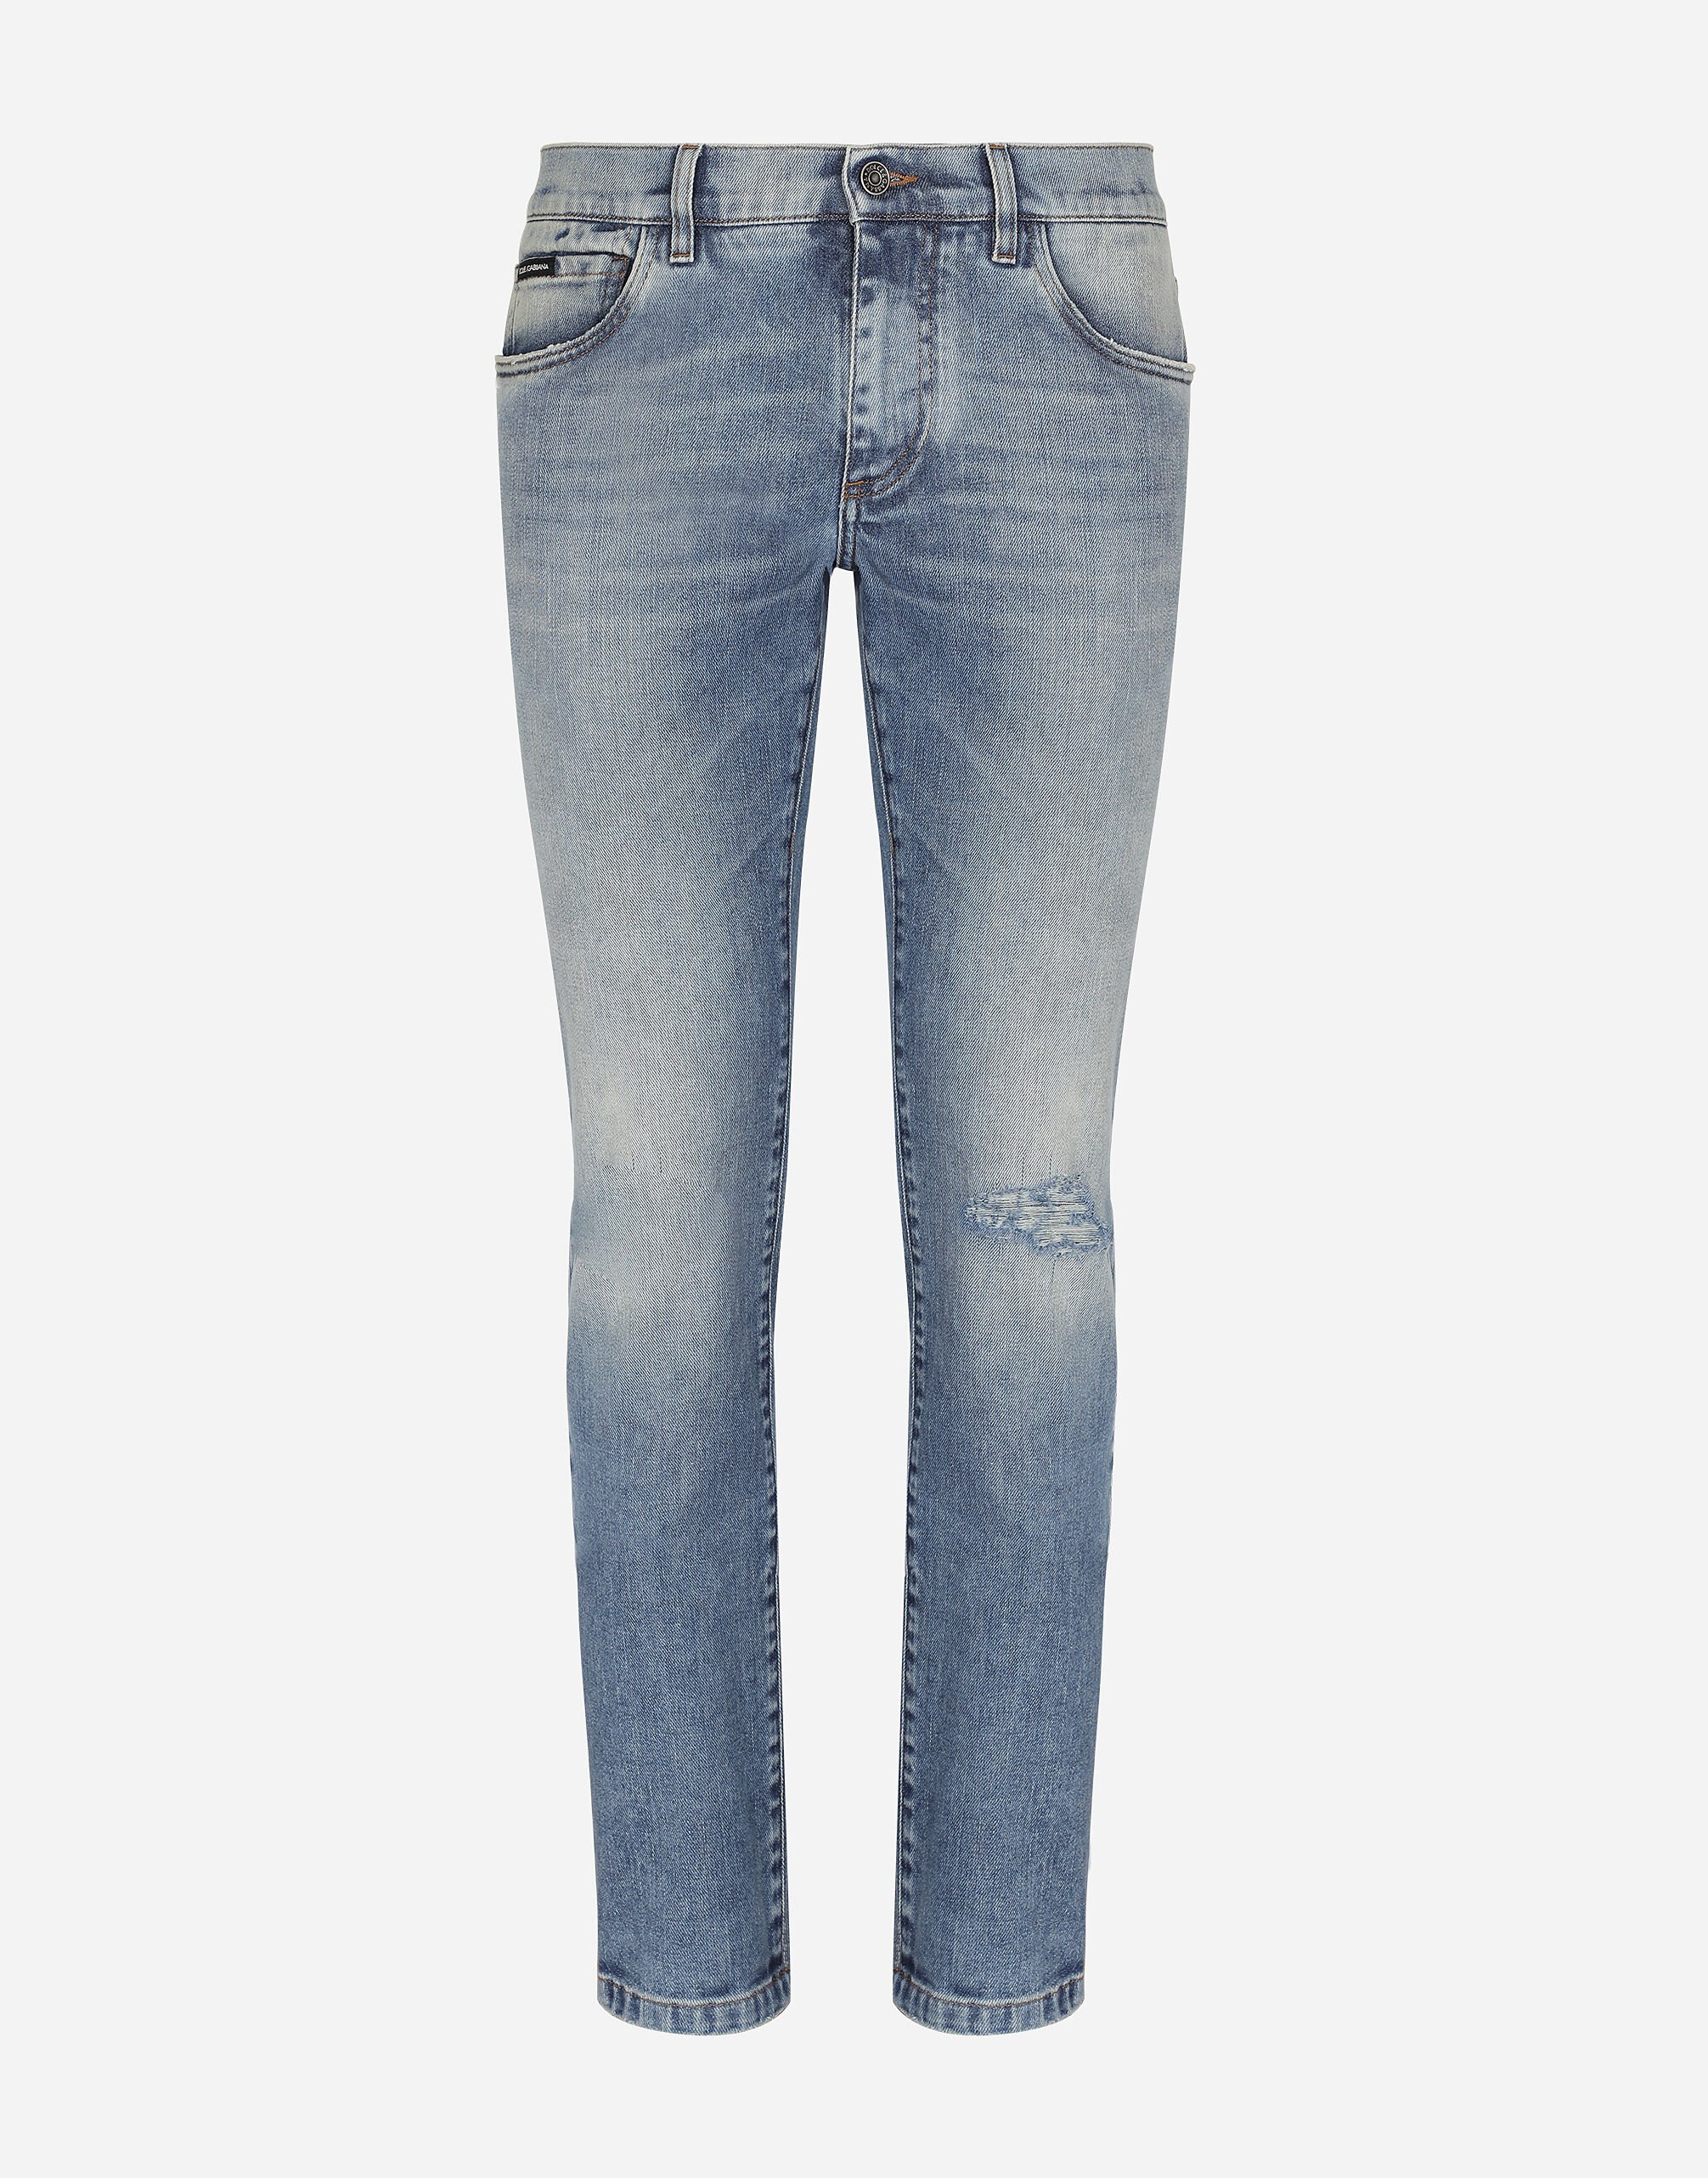 Dolce & Gabbana Light blue skinny stretch jeans with rips Black G9AHFTGG065